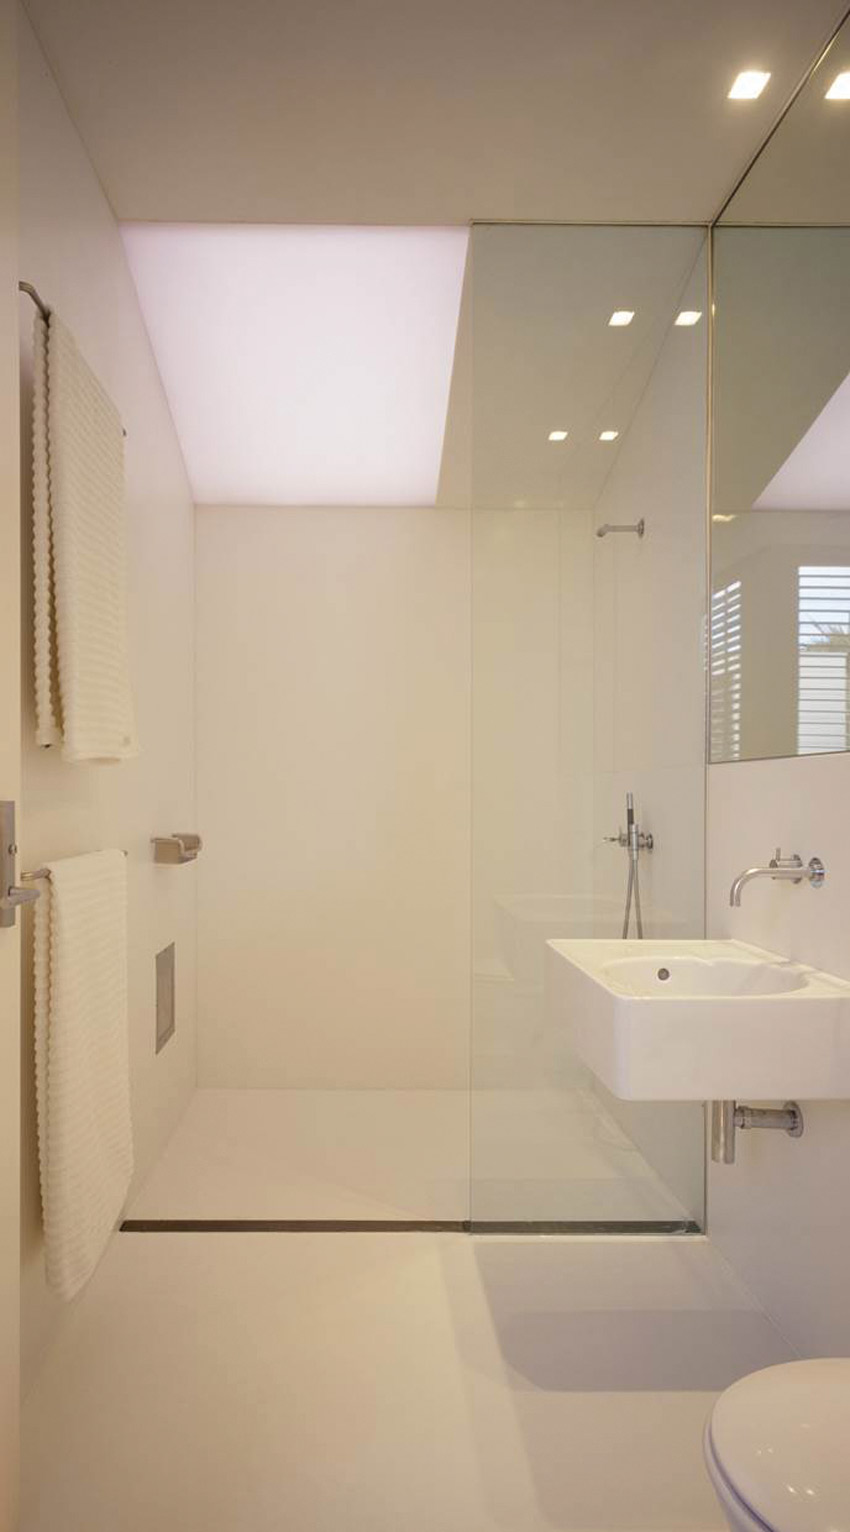 Photo of a bathroom interior.